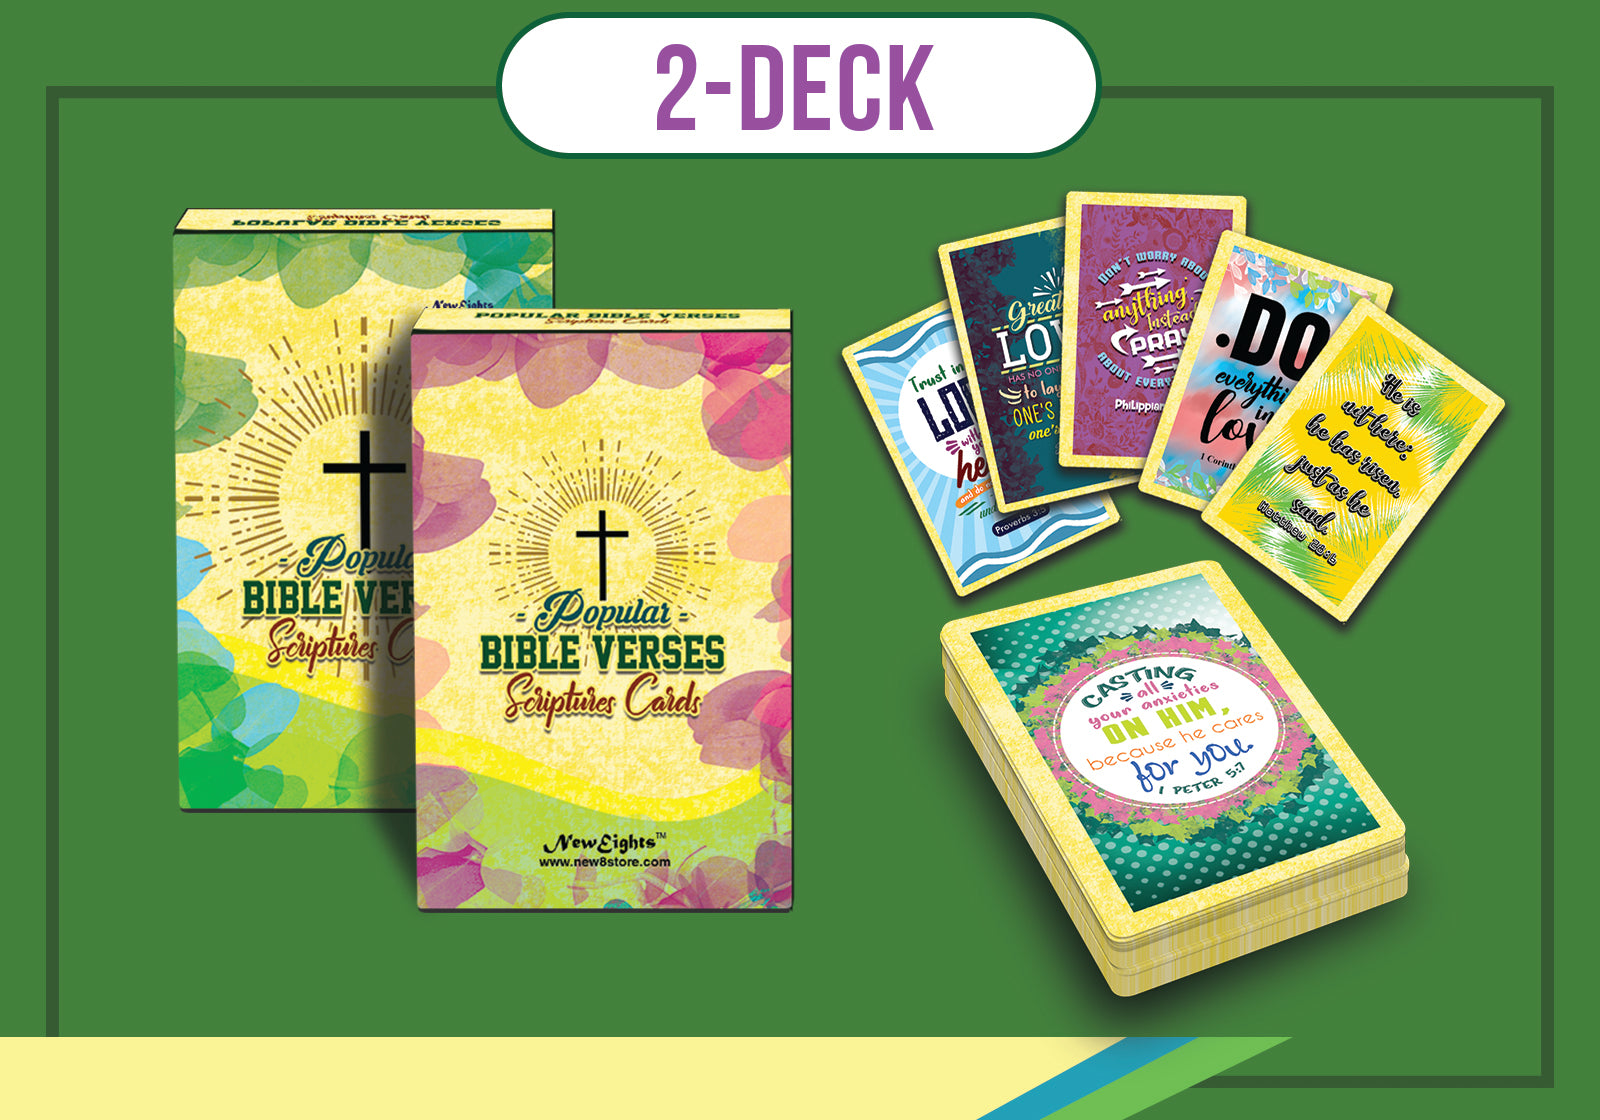 Popular Bible Verses Scriptures Cards (2-Deck)